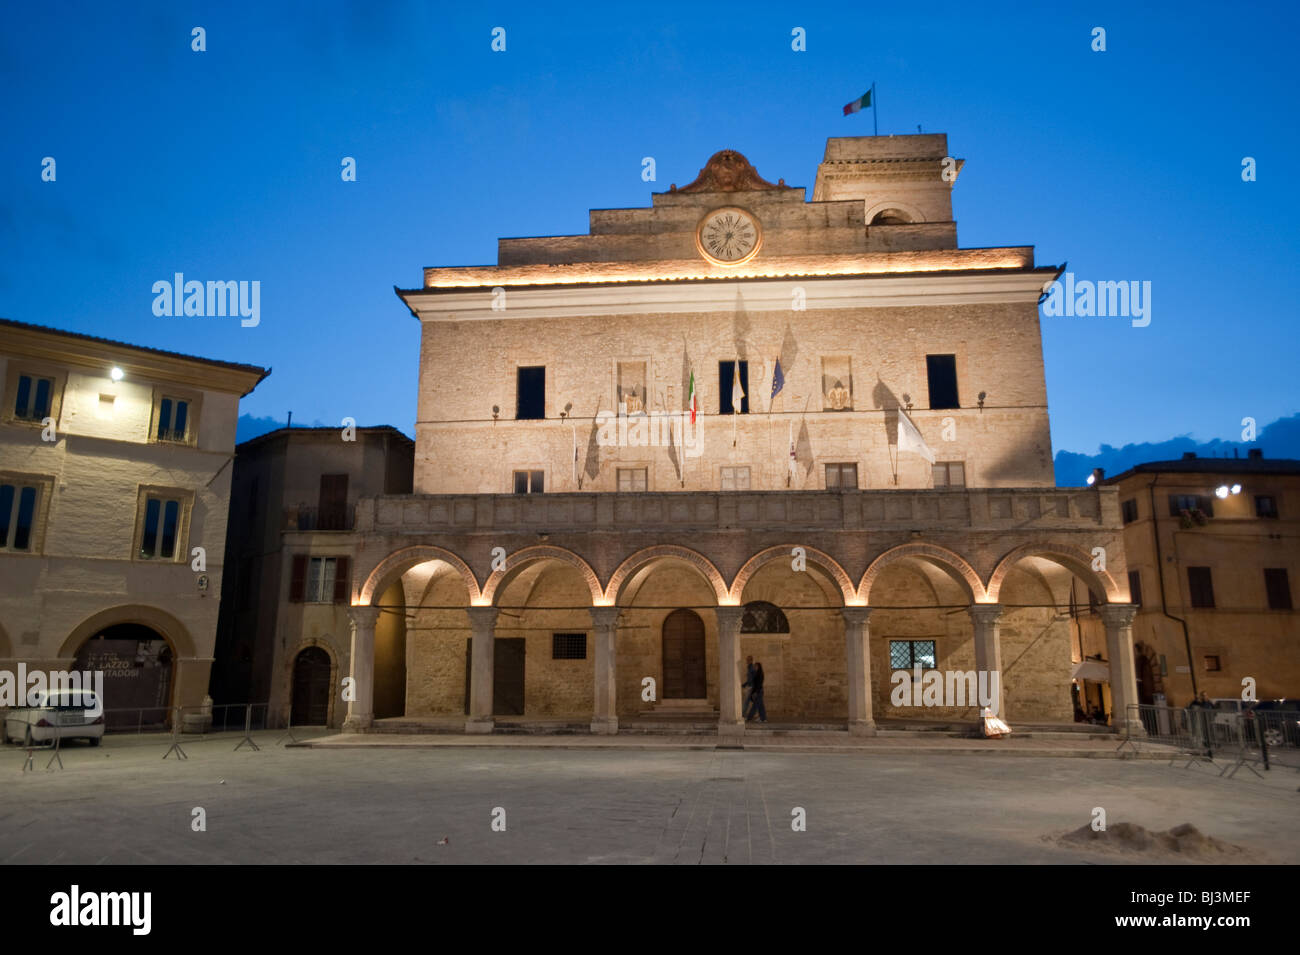 Historic building, illuminated, Montefalco, Umbria, Italy, Europe Stock Photo